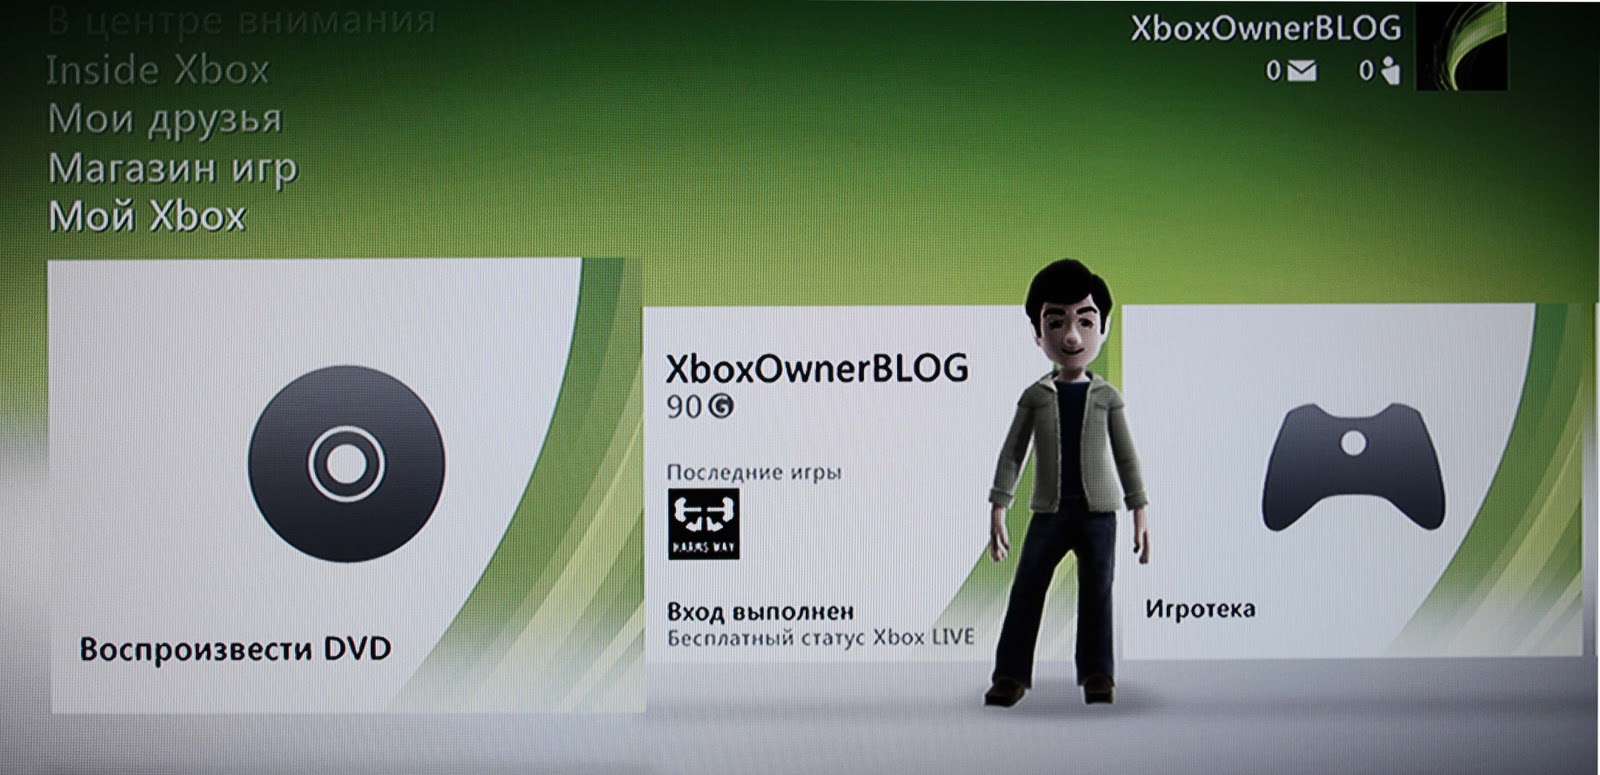 Служба xbox live. Xbox 2010 года. Хбокс лайв кнопки. Индификатор устройства хбокс лайв. Игра иксбокс мой ресторан.